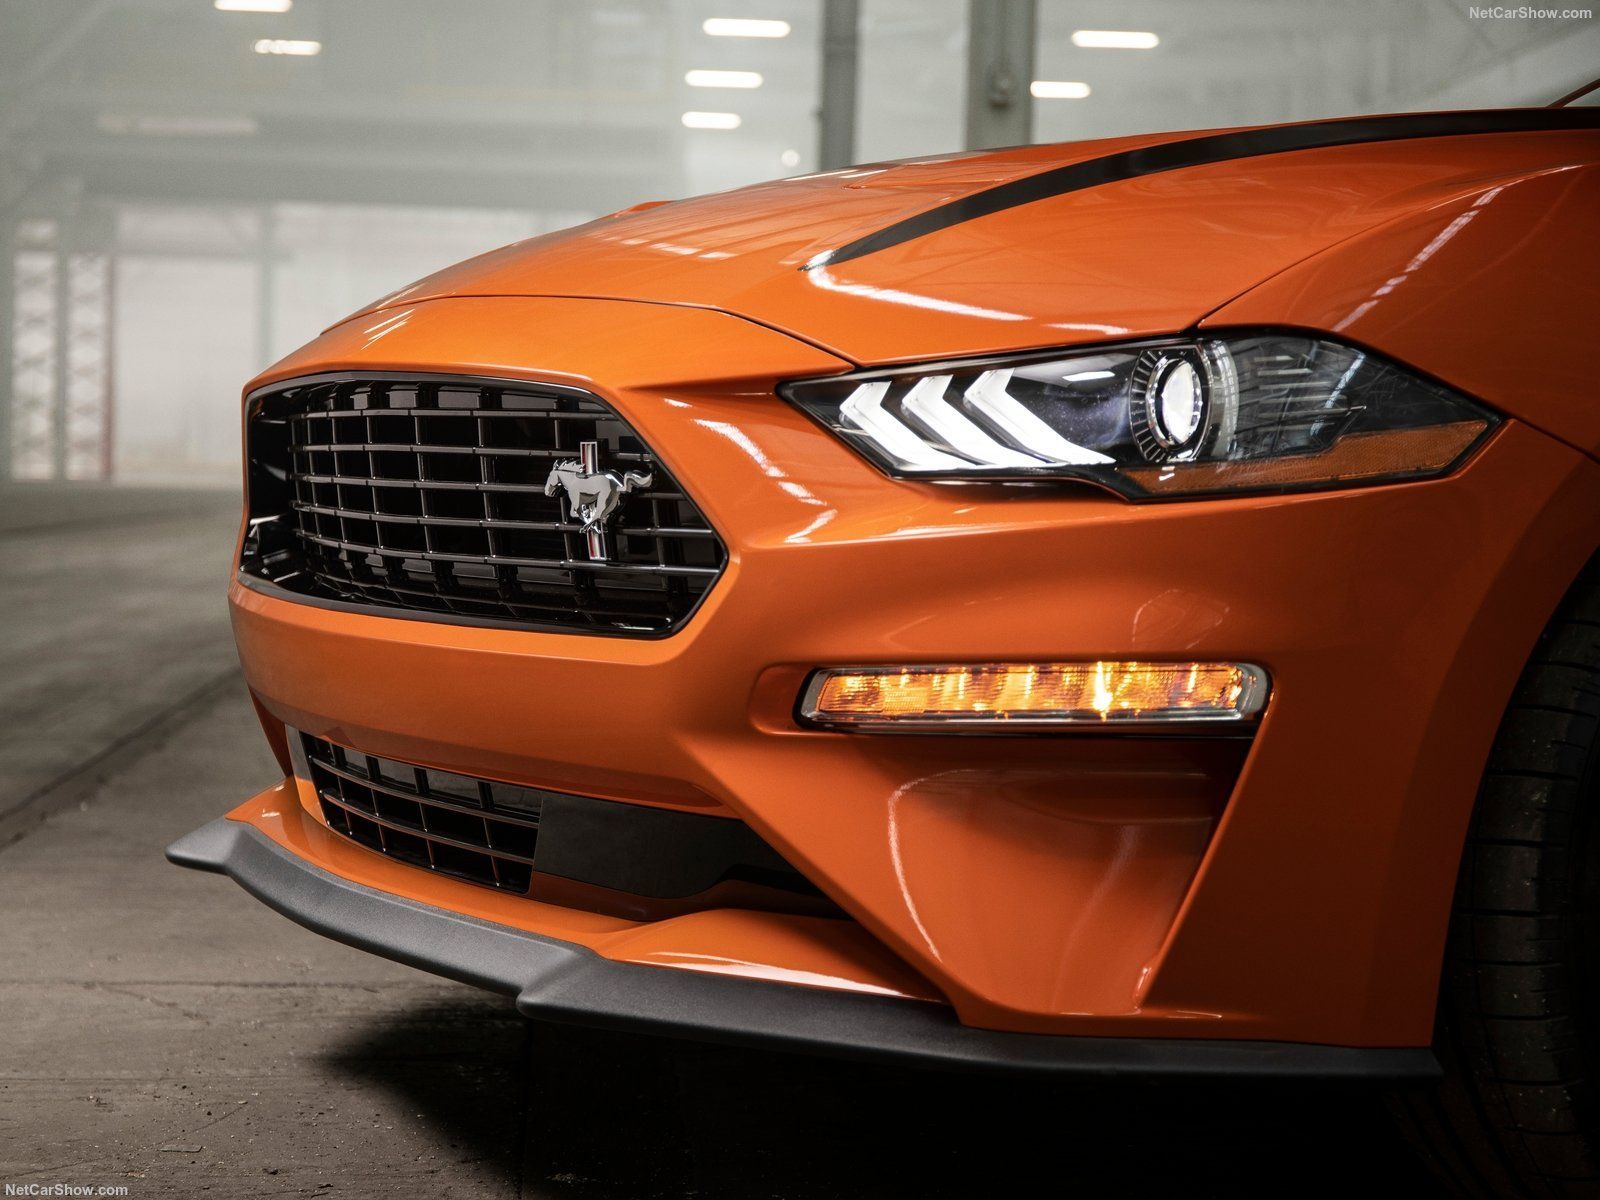 A-t-on aperçu la première Ford Mustang hybride ?